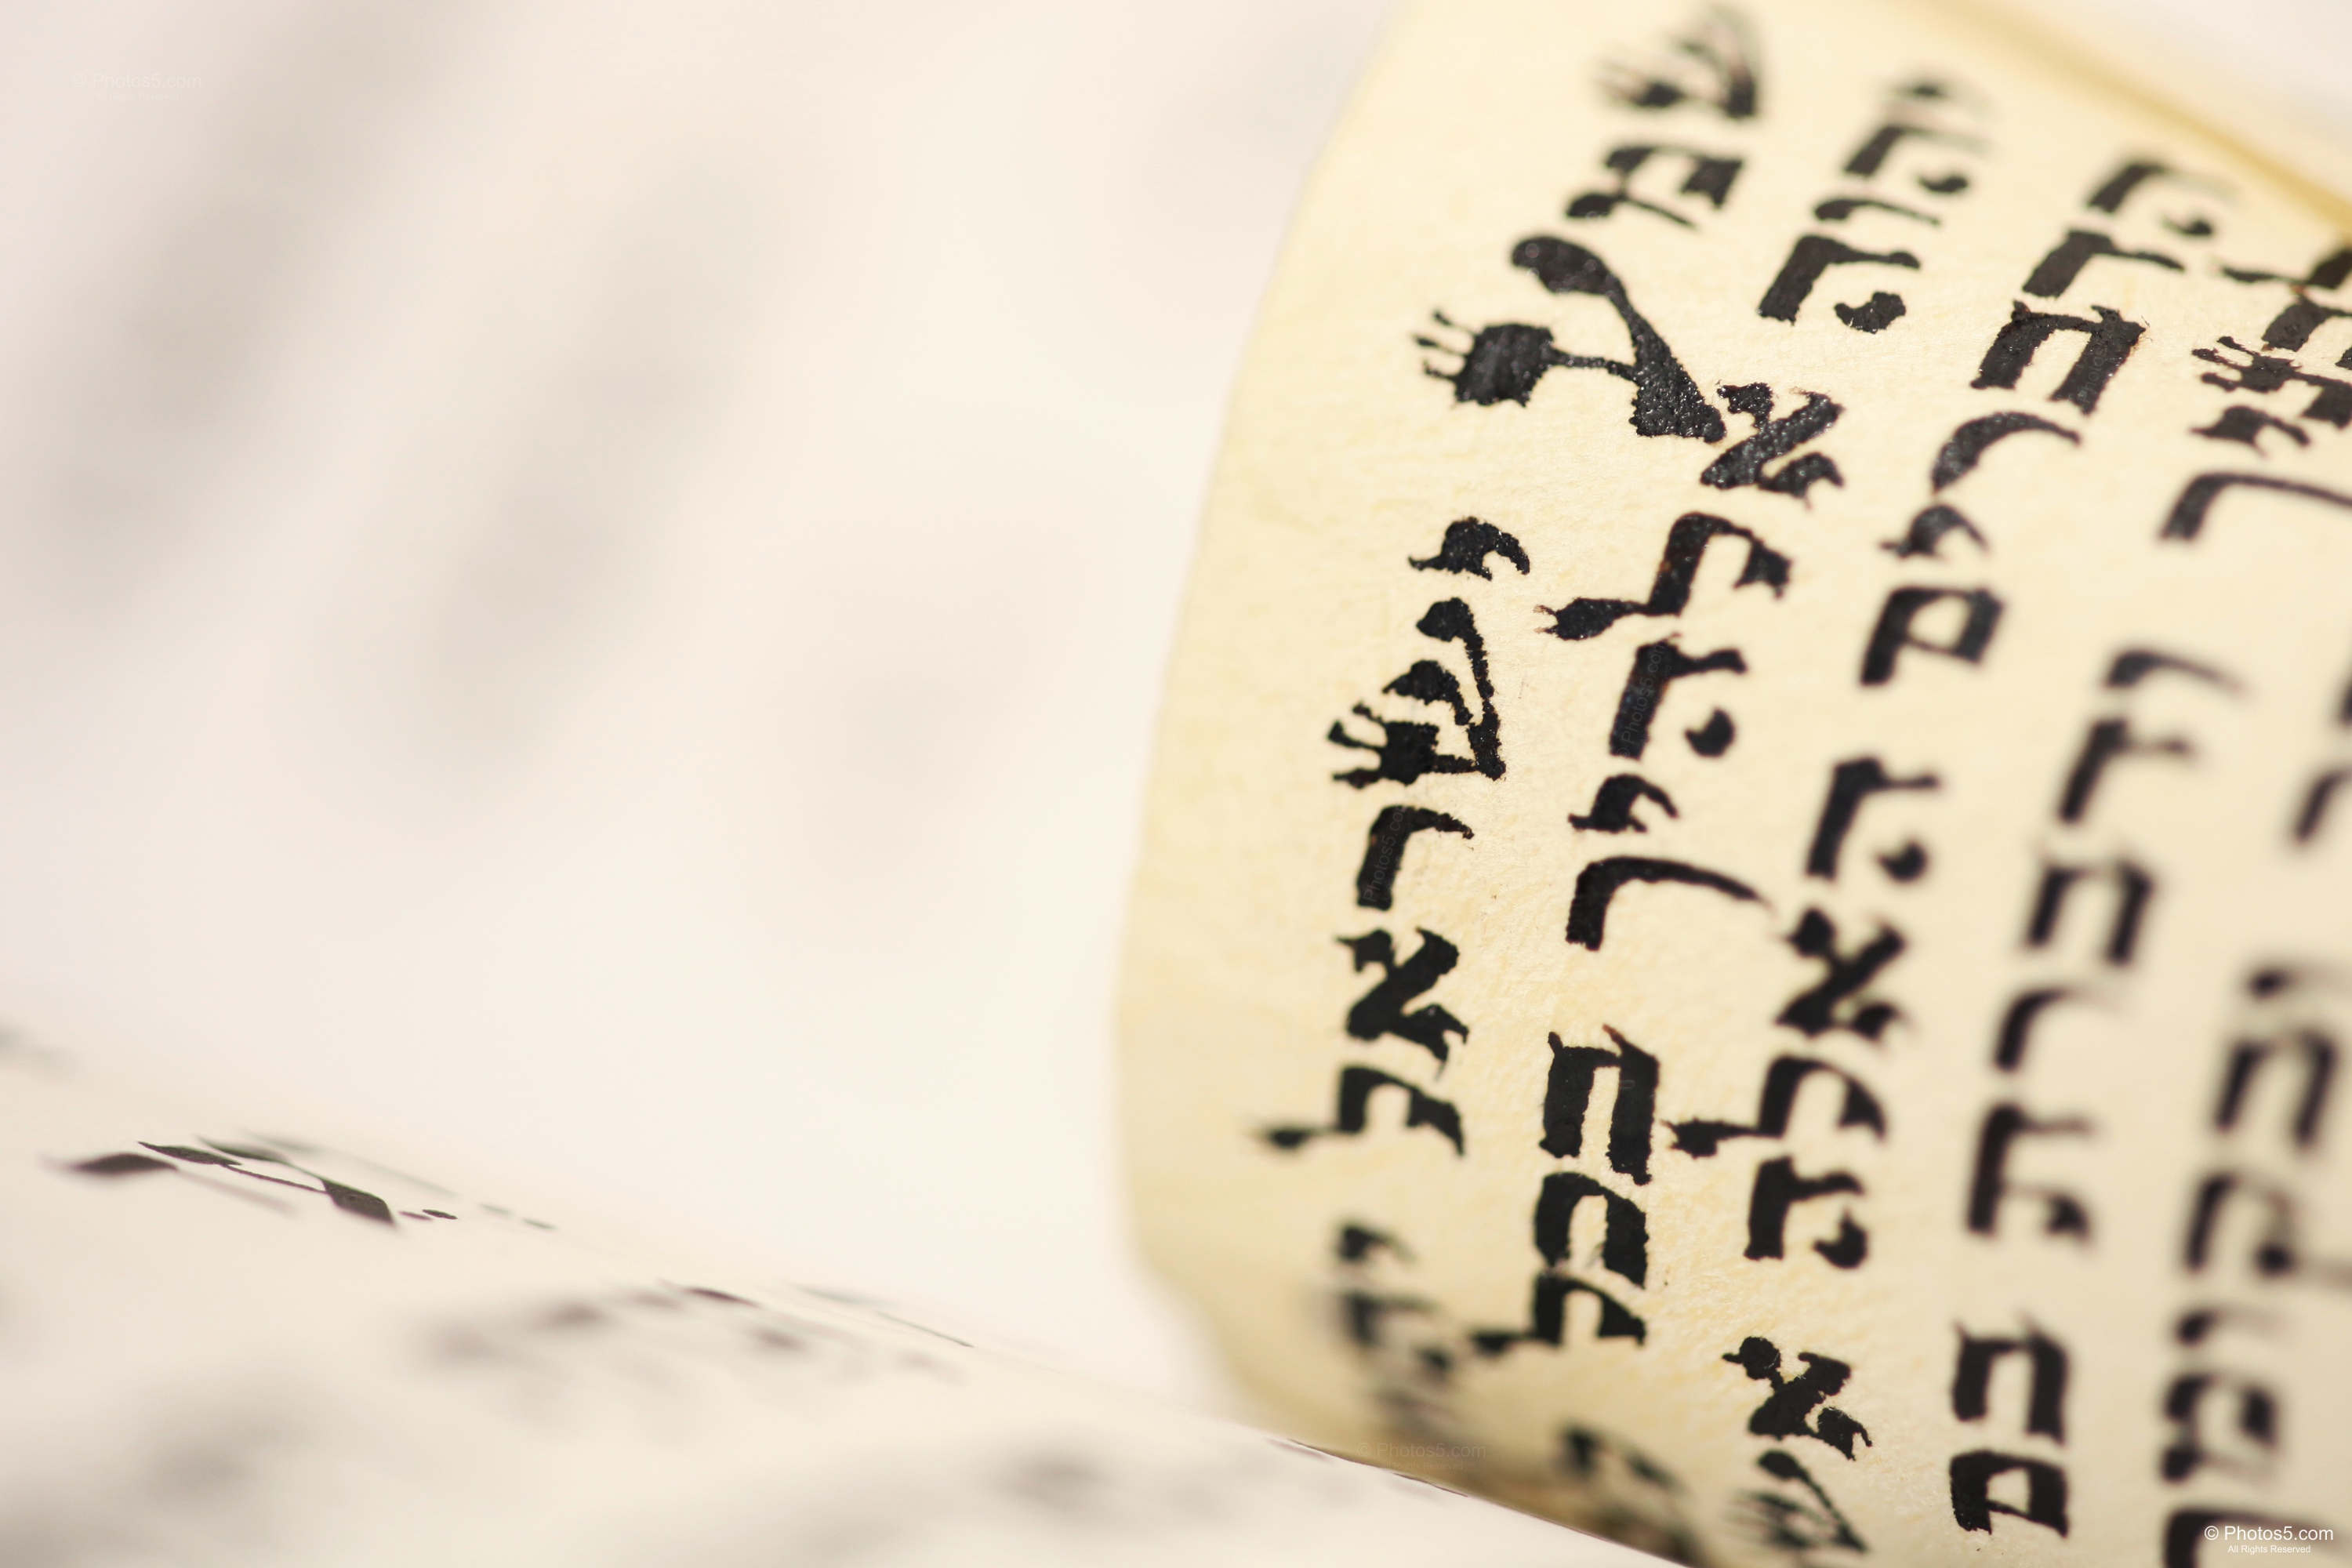 Close Up of Jewish Religious Text in Hebrew – Photos5.com